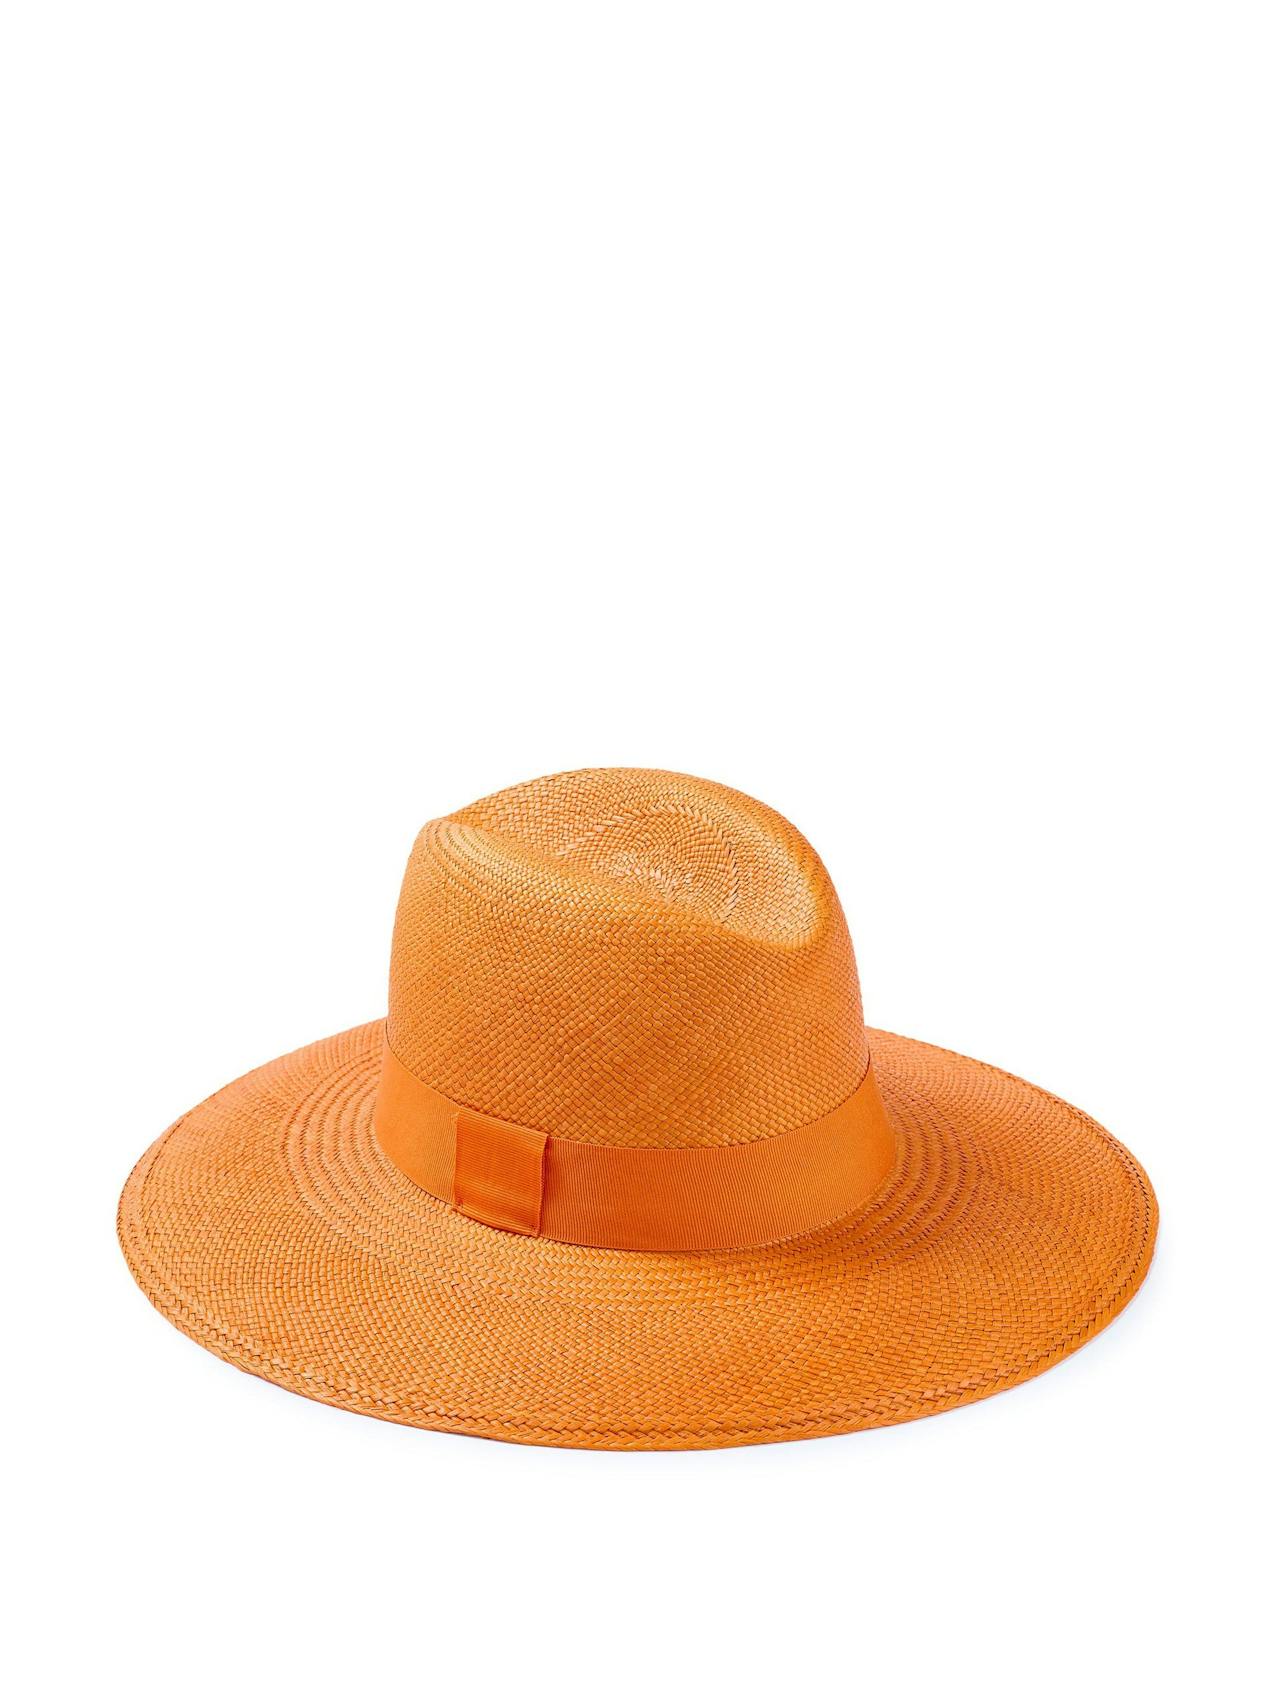 Livia hat in orange